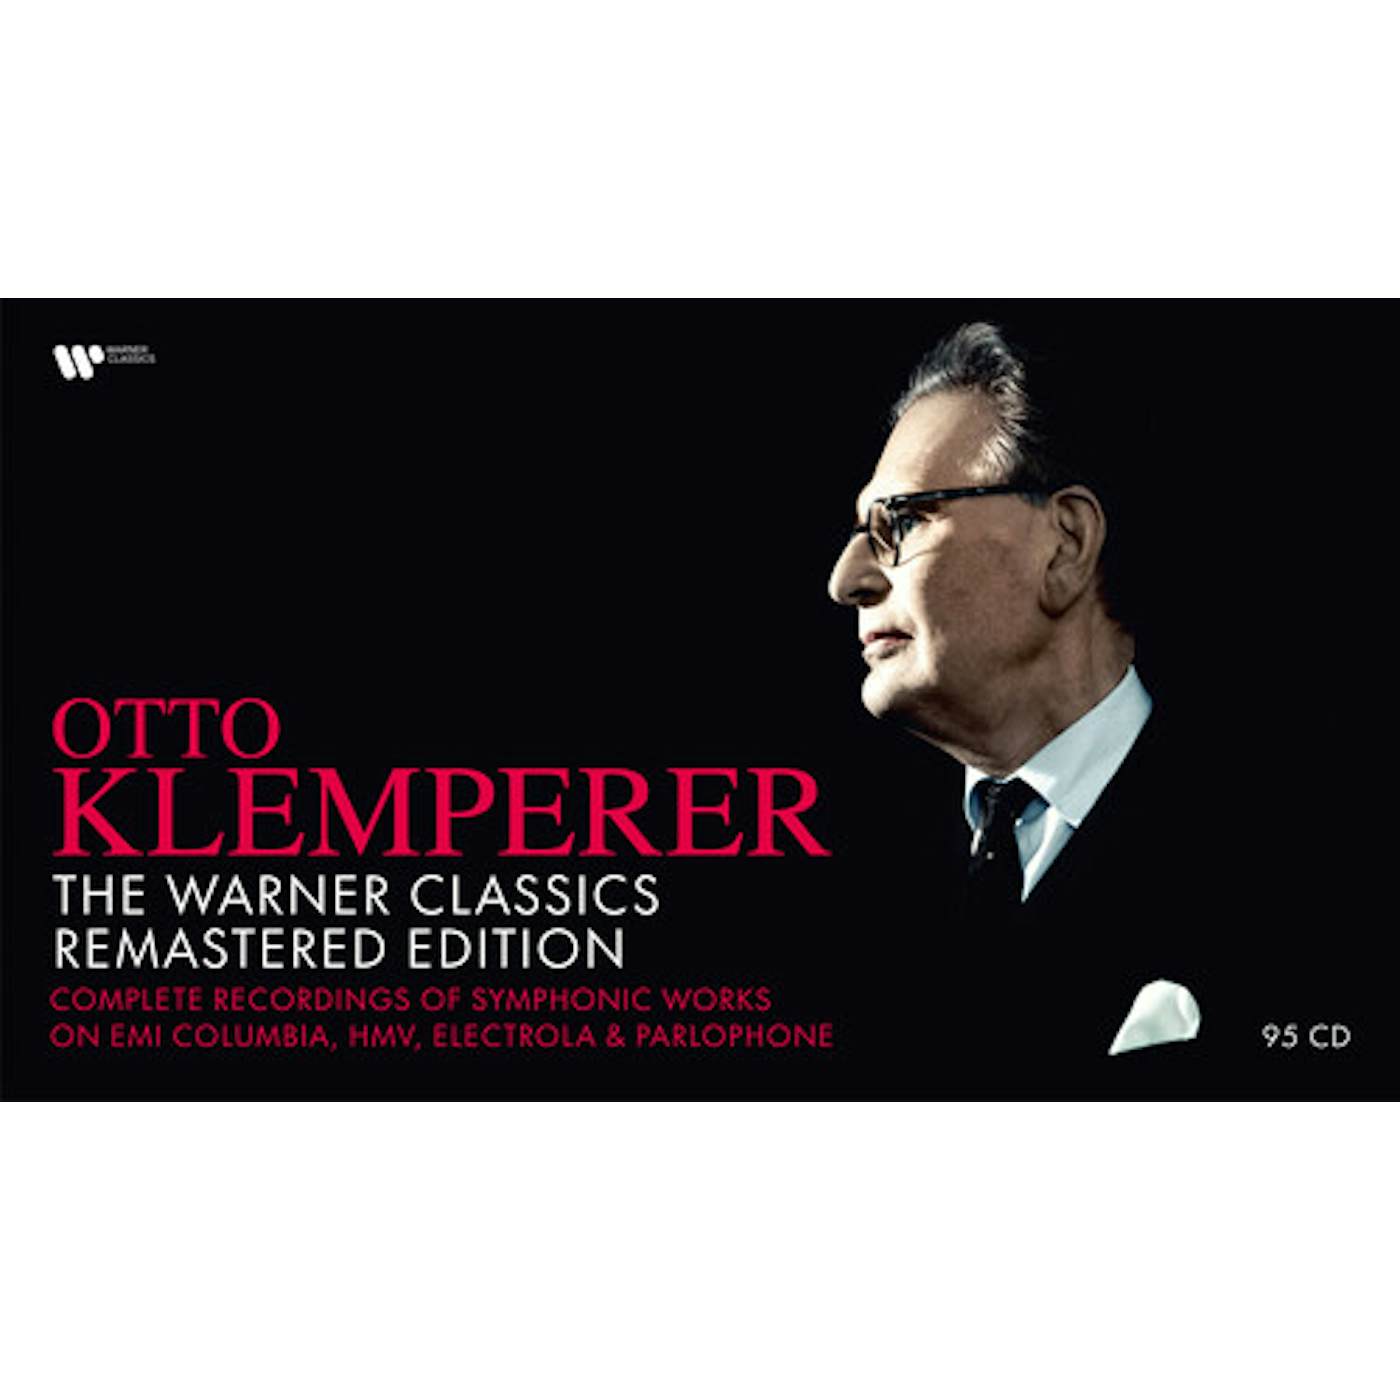 Otto Klemperer WARNER CLASSICS REMASTERED EDITION - VOL. 1 CD